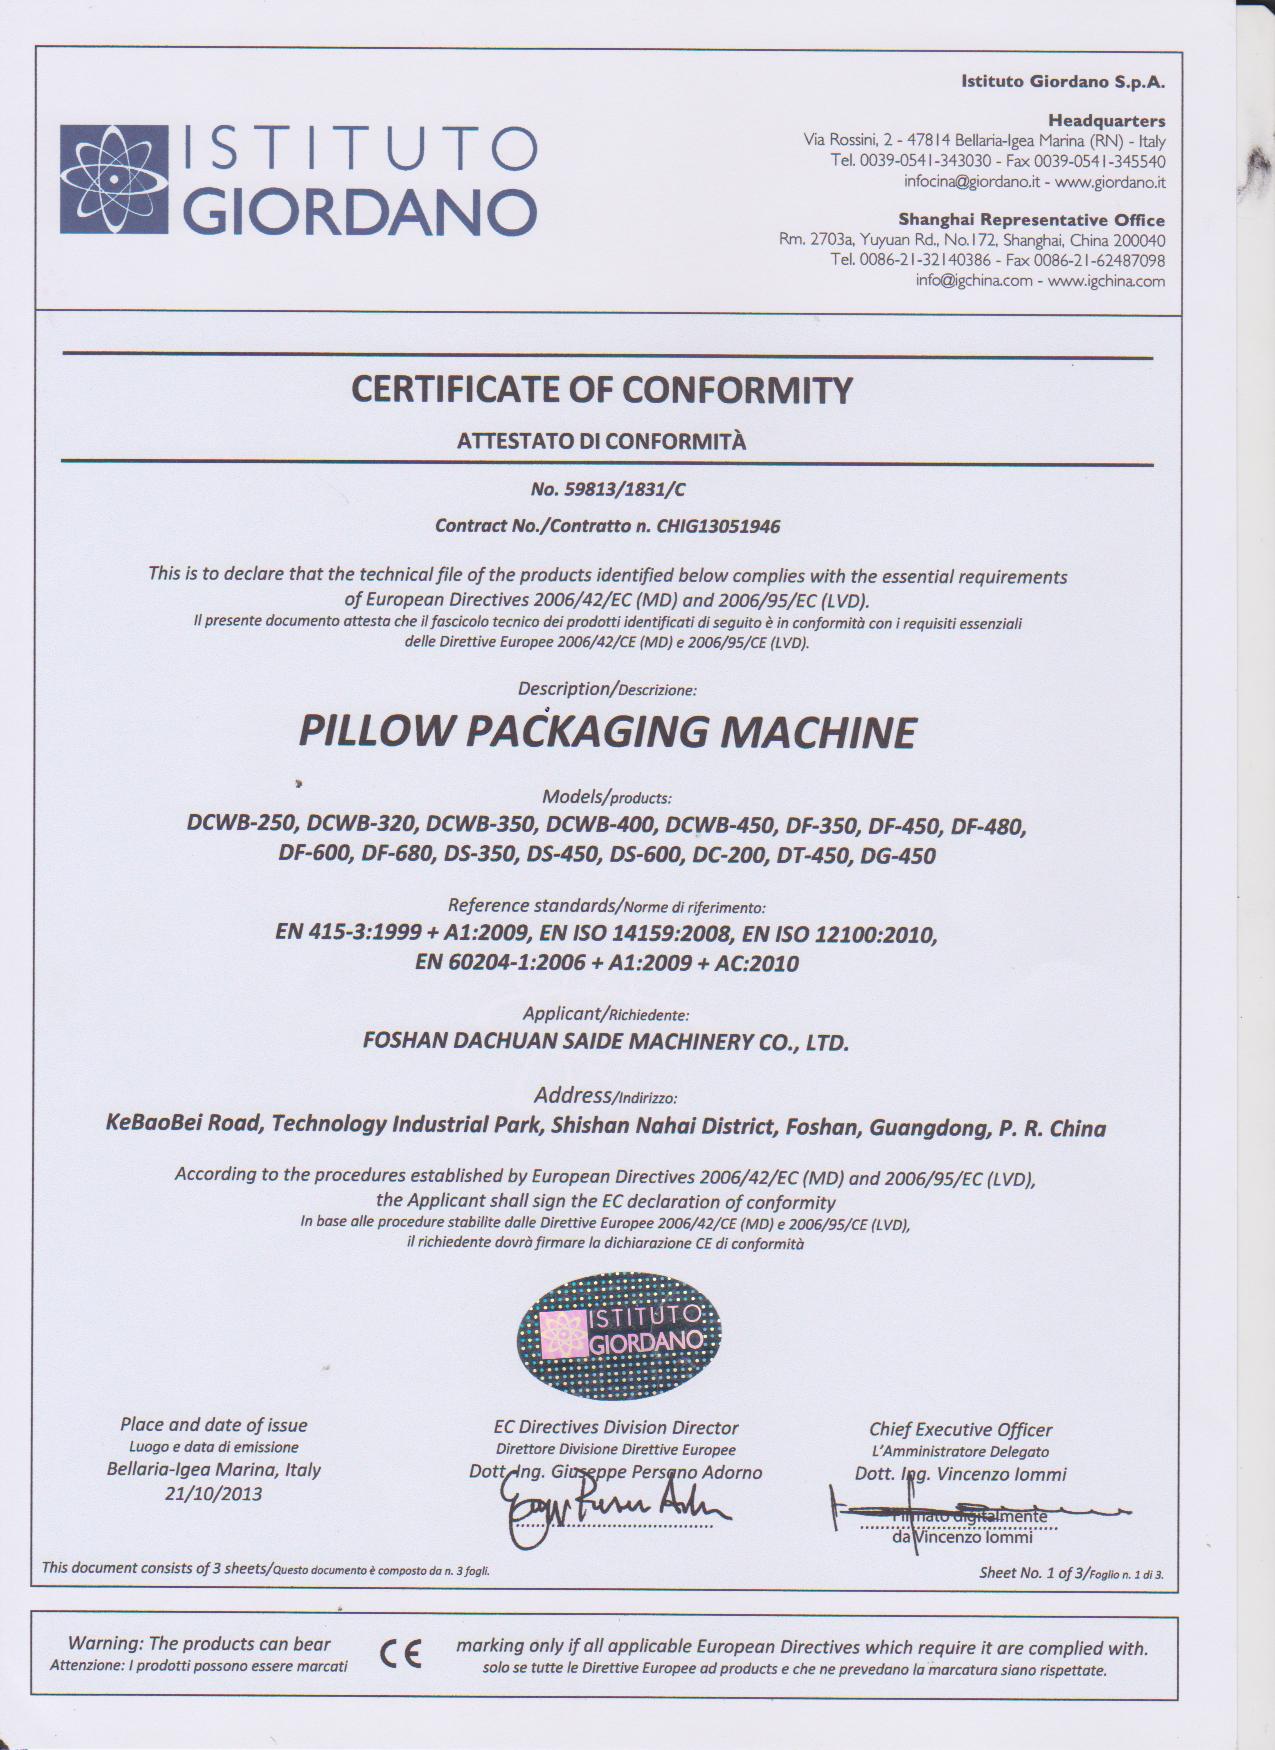 Pillow packing machine CE